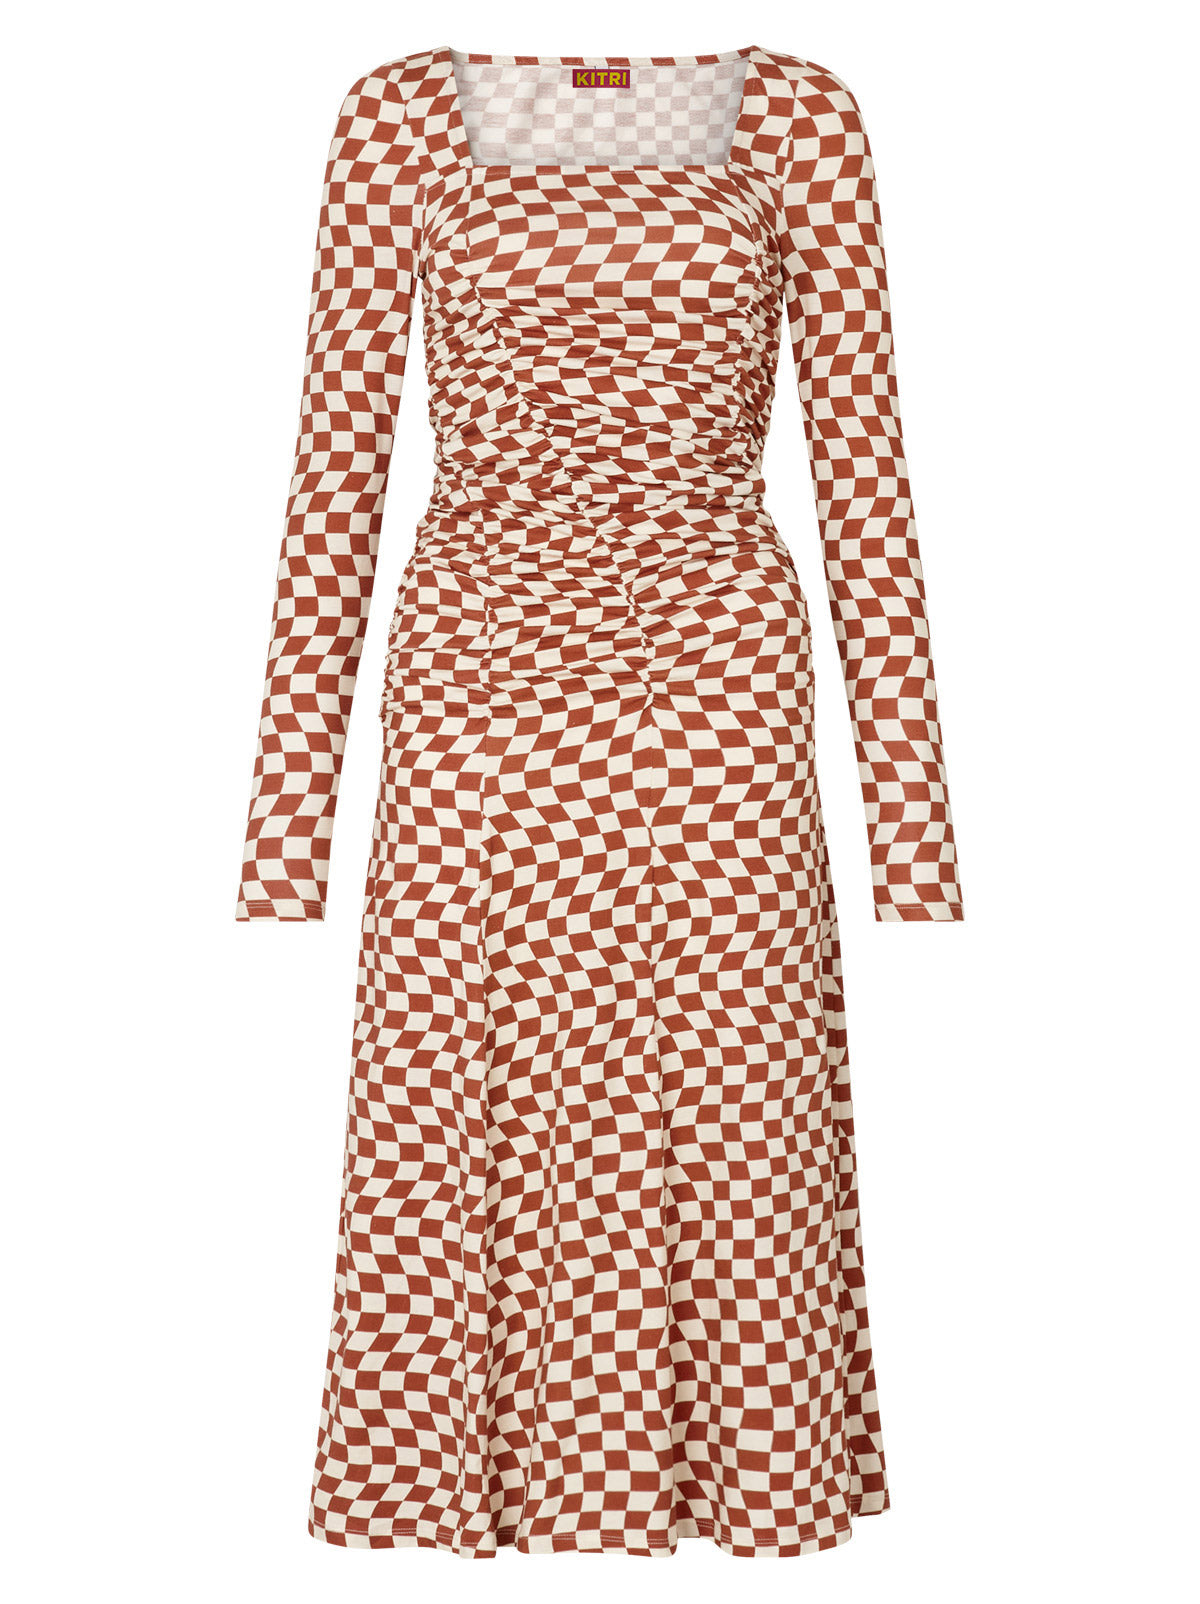 Diedre Wavy Checker Ruched Jersey Dress by KITRI Studio